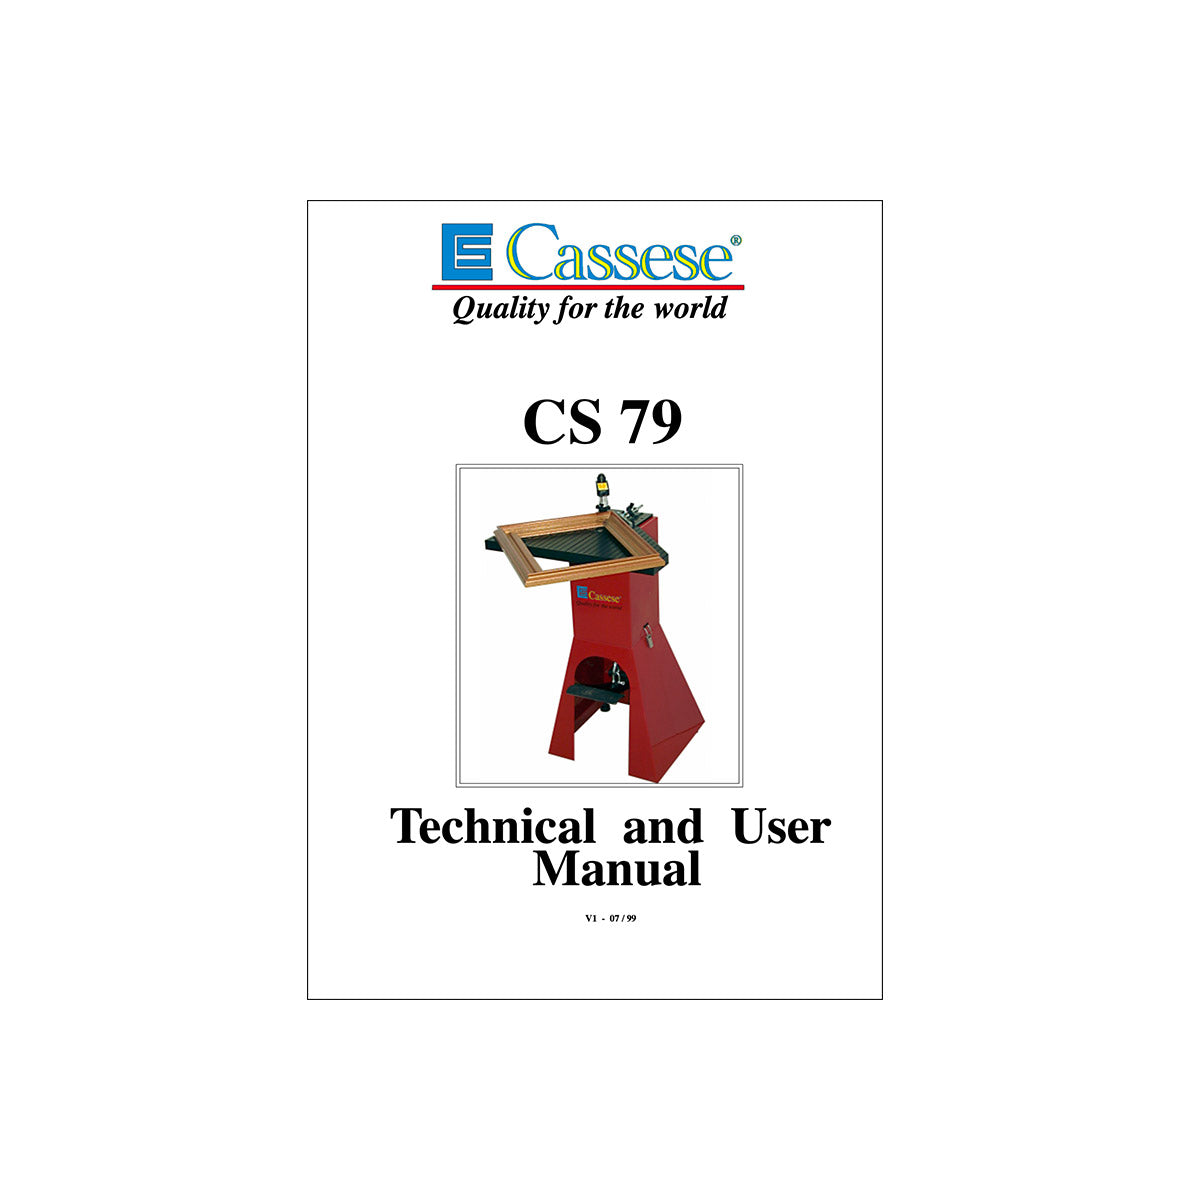 Cassese cs79 - Underpinner Spares